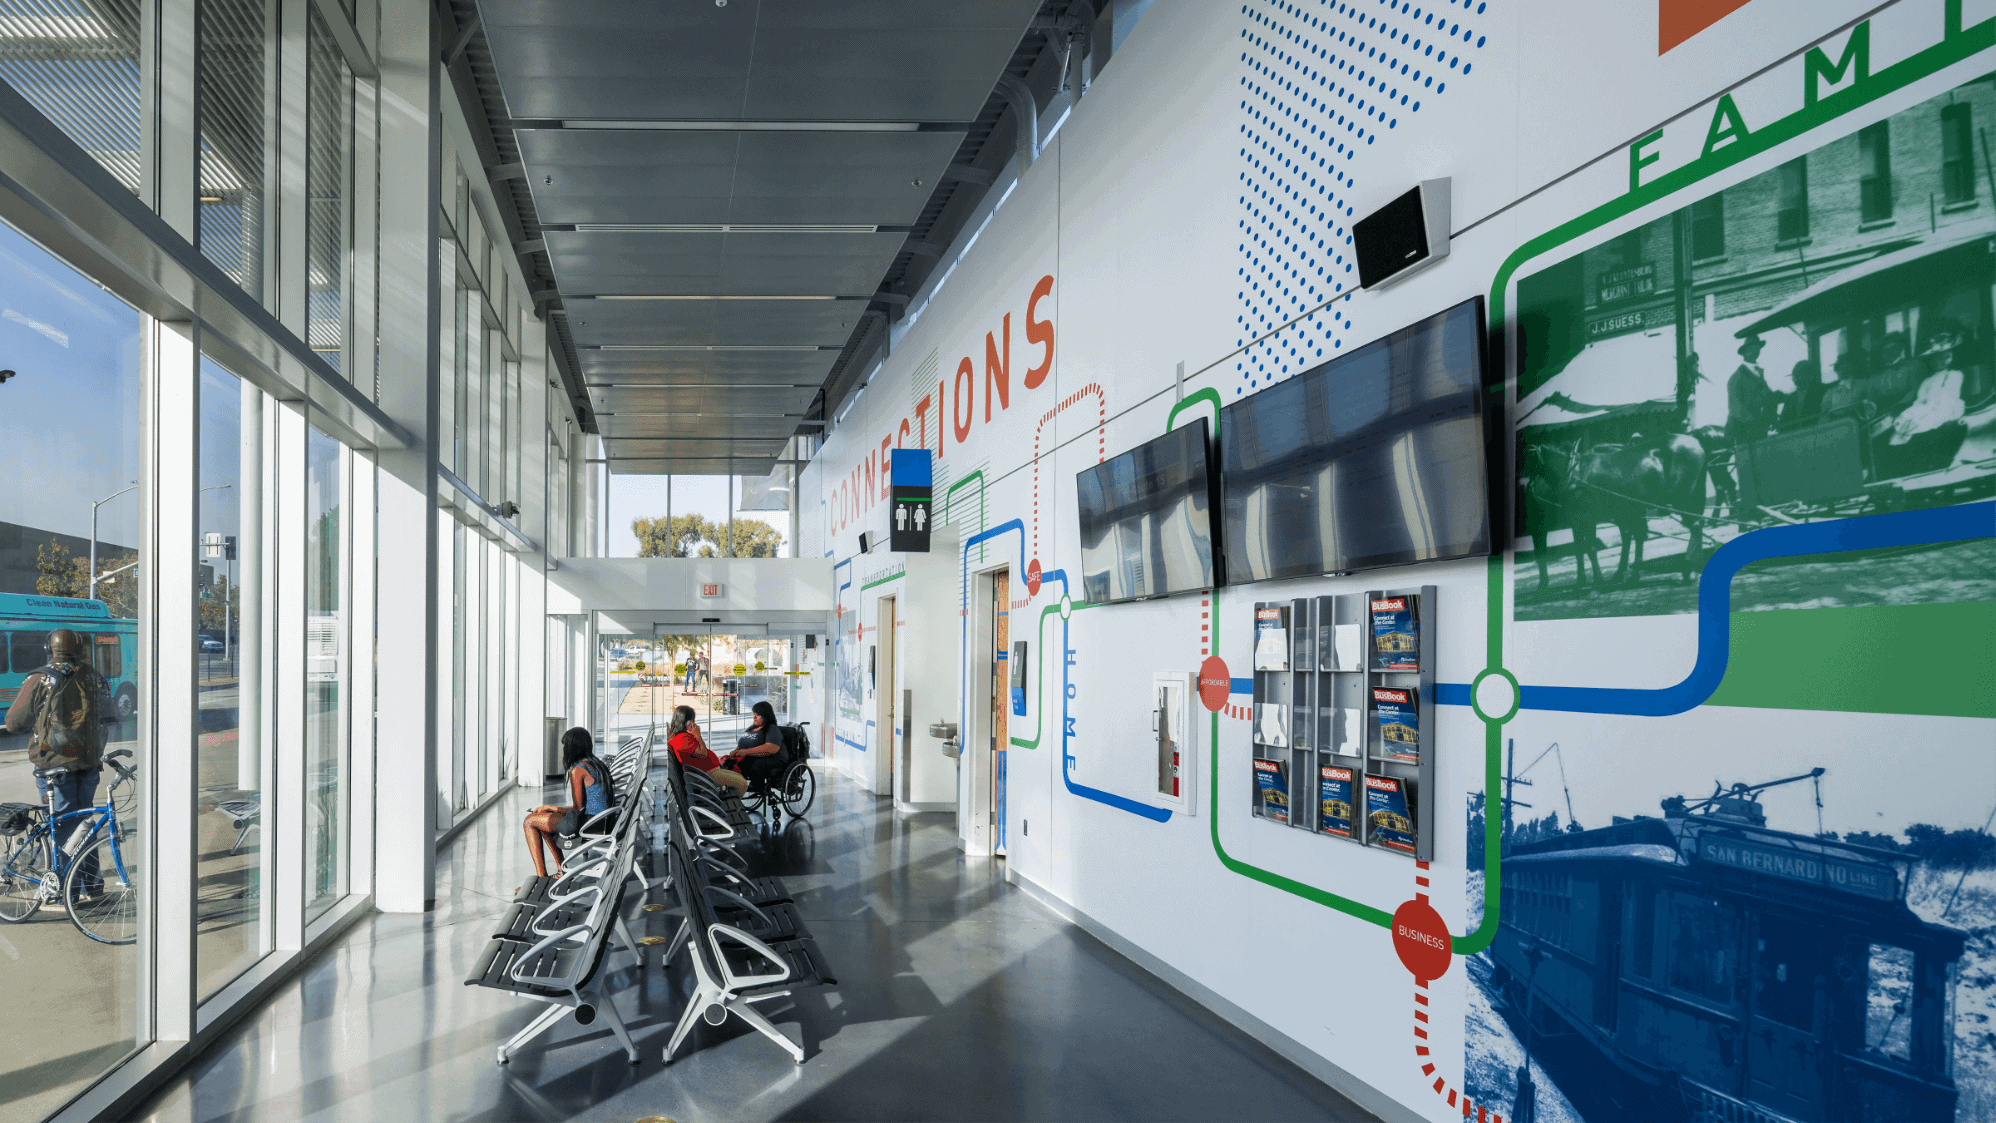 Image of San Bernardino Transit Center interior